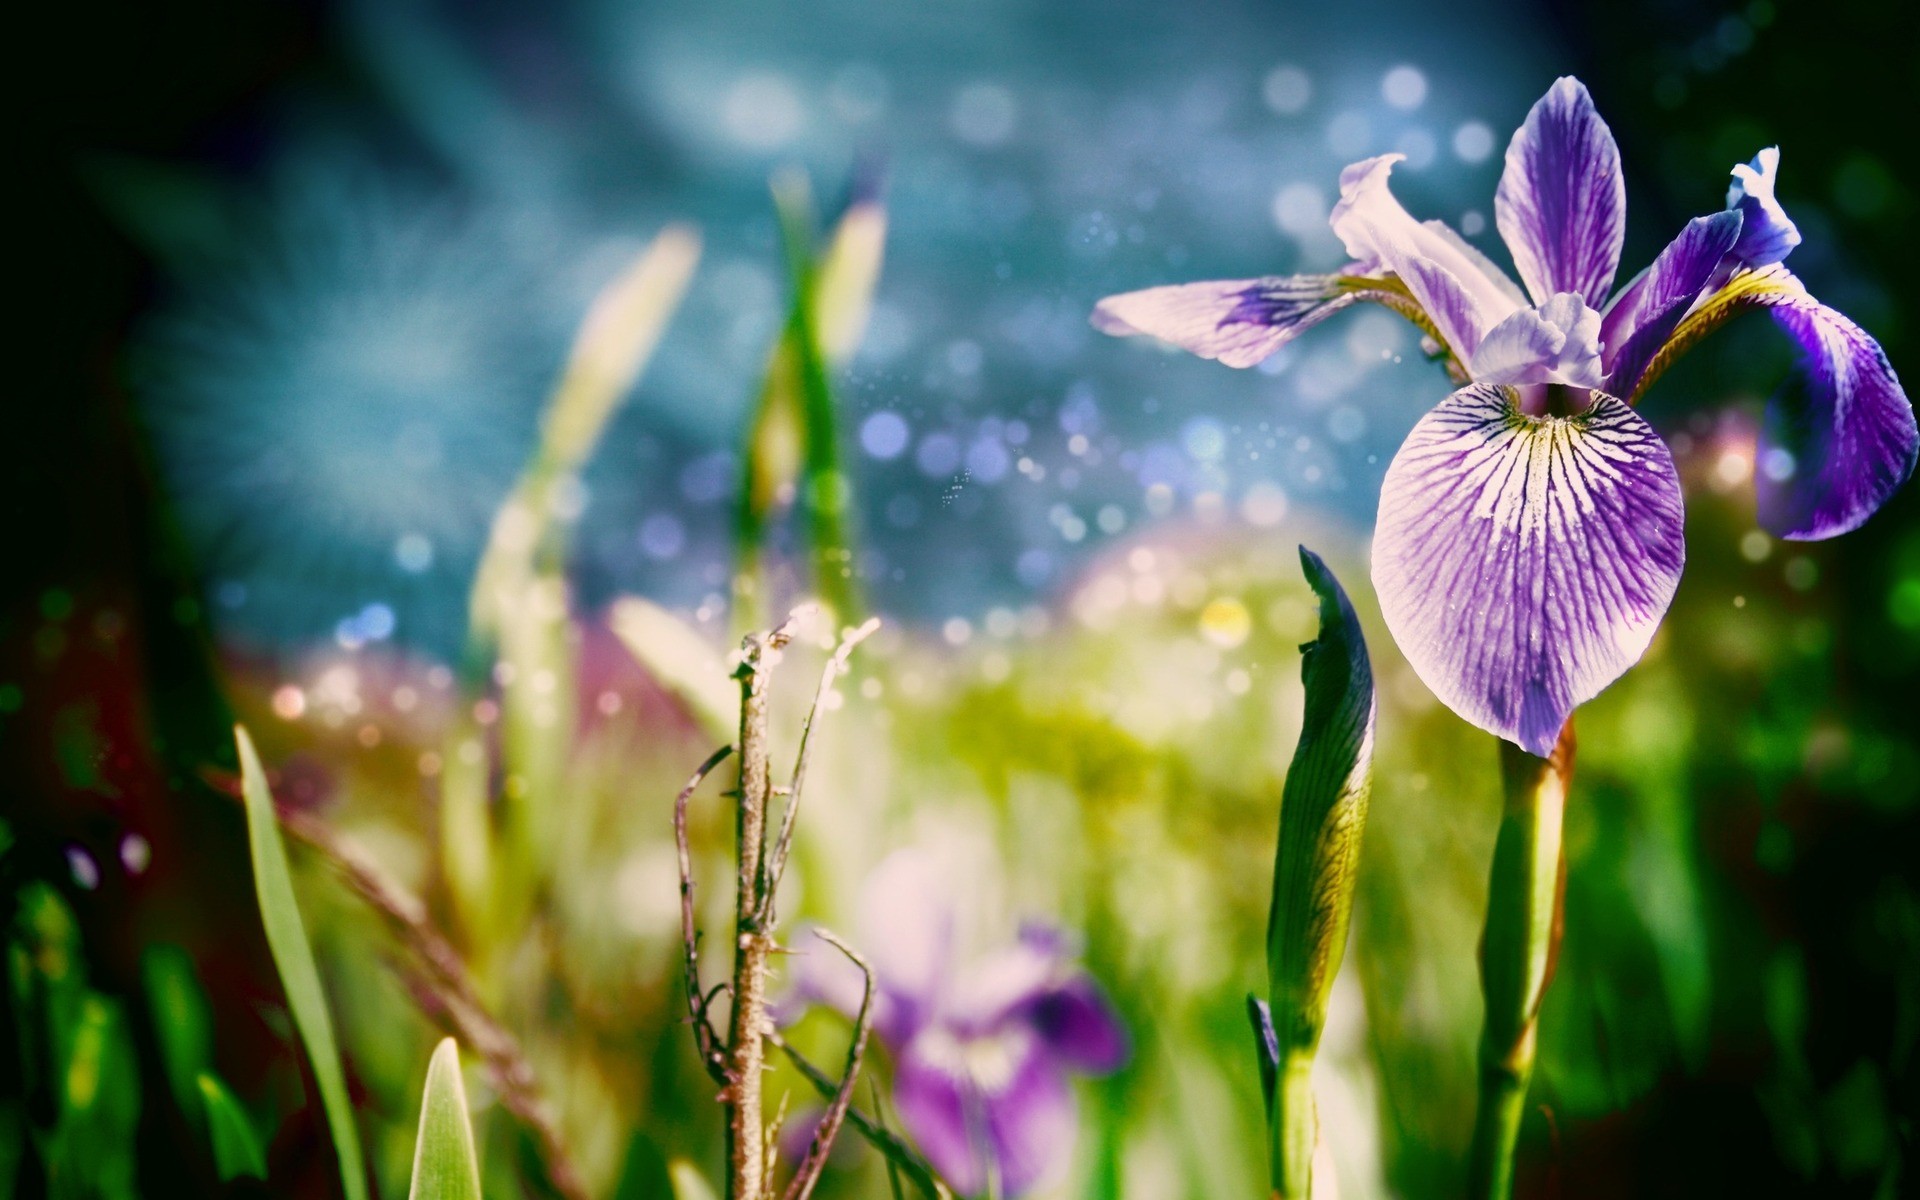 261690 descargar imagen tierra/naturaleza, iris, flor, flores: fondos de pantalla y protectores de pantalla gratis